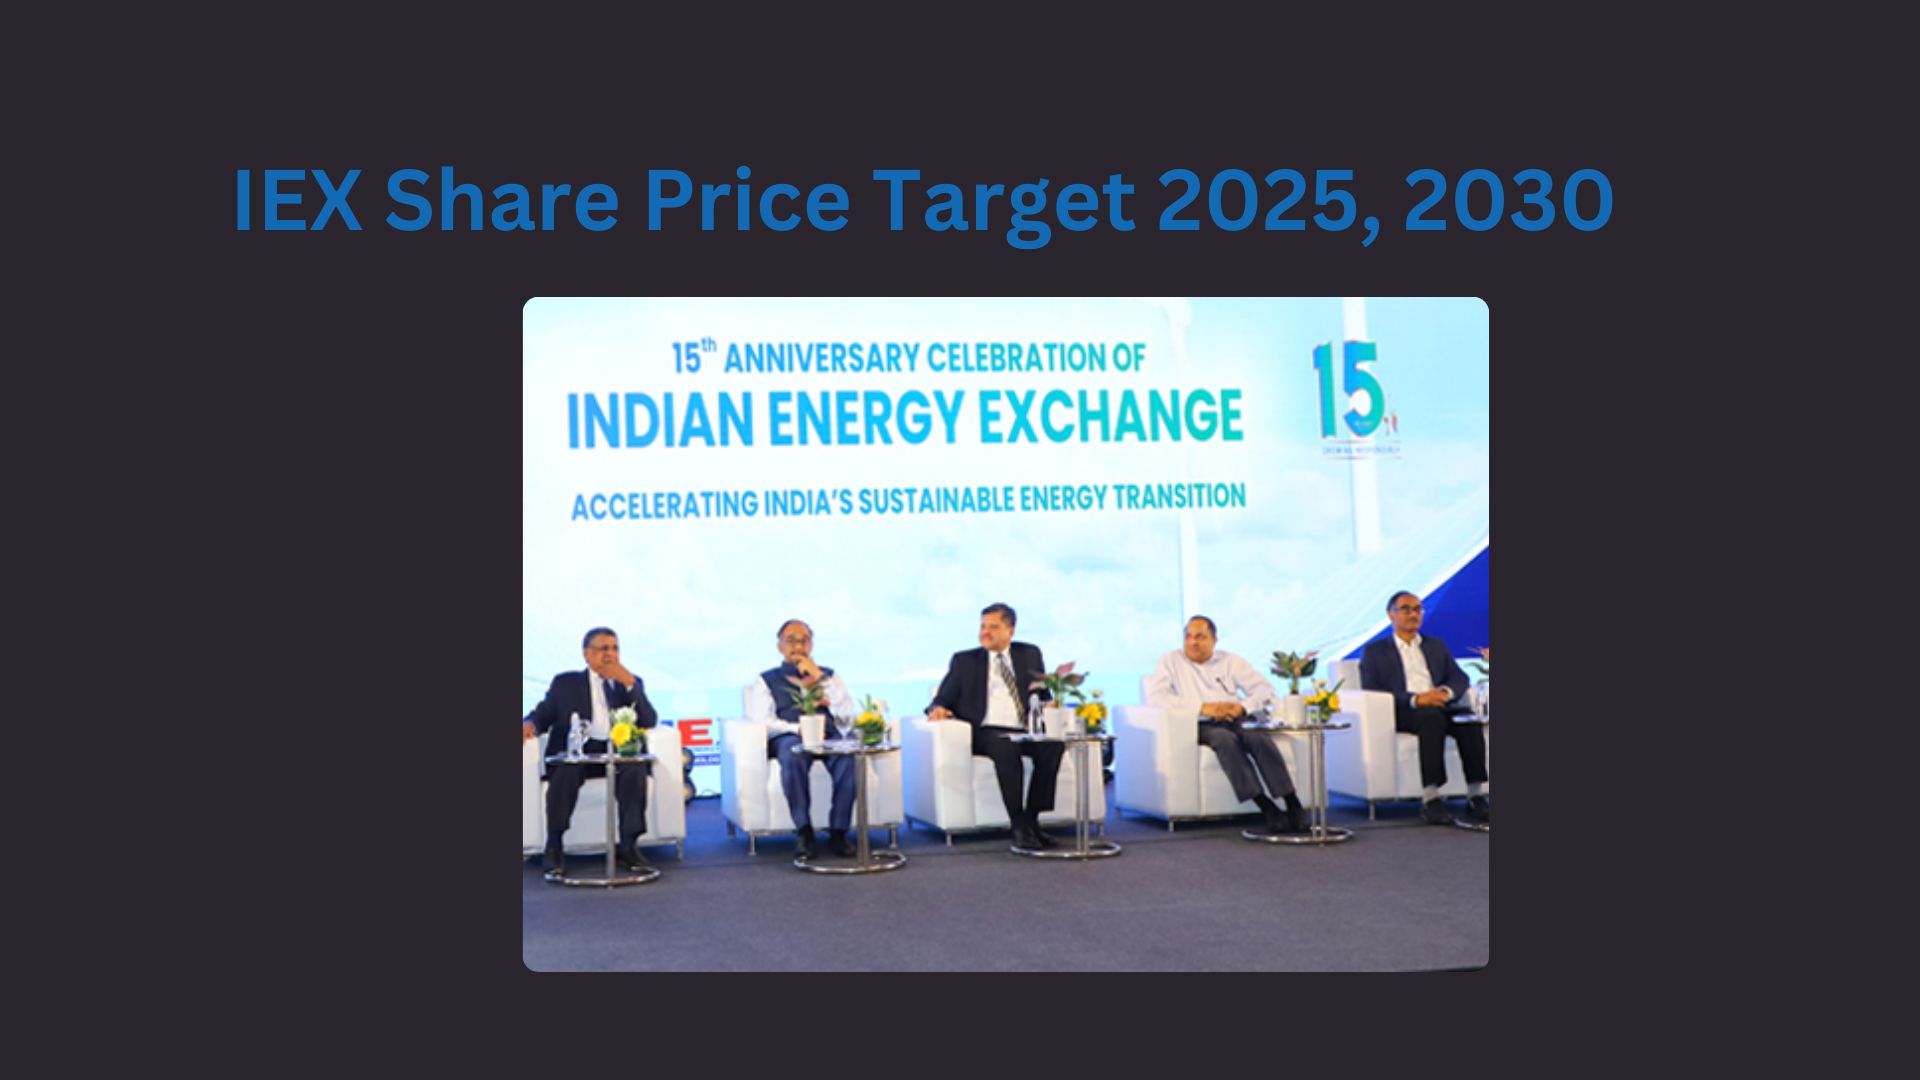 IEX Share Price Target 2025, 2030